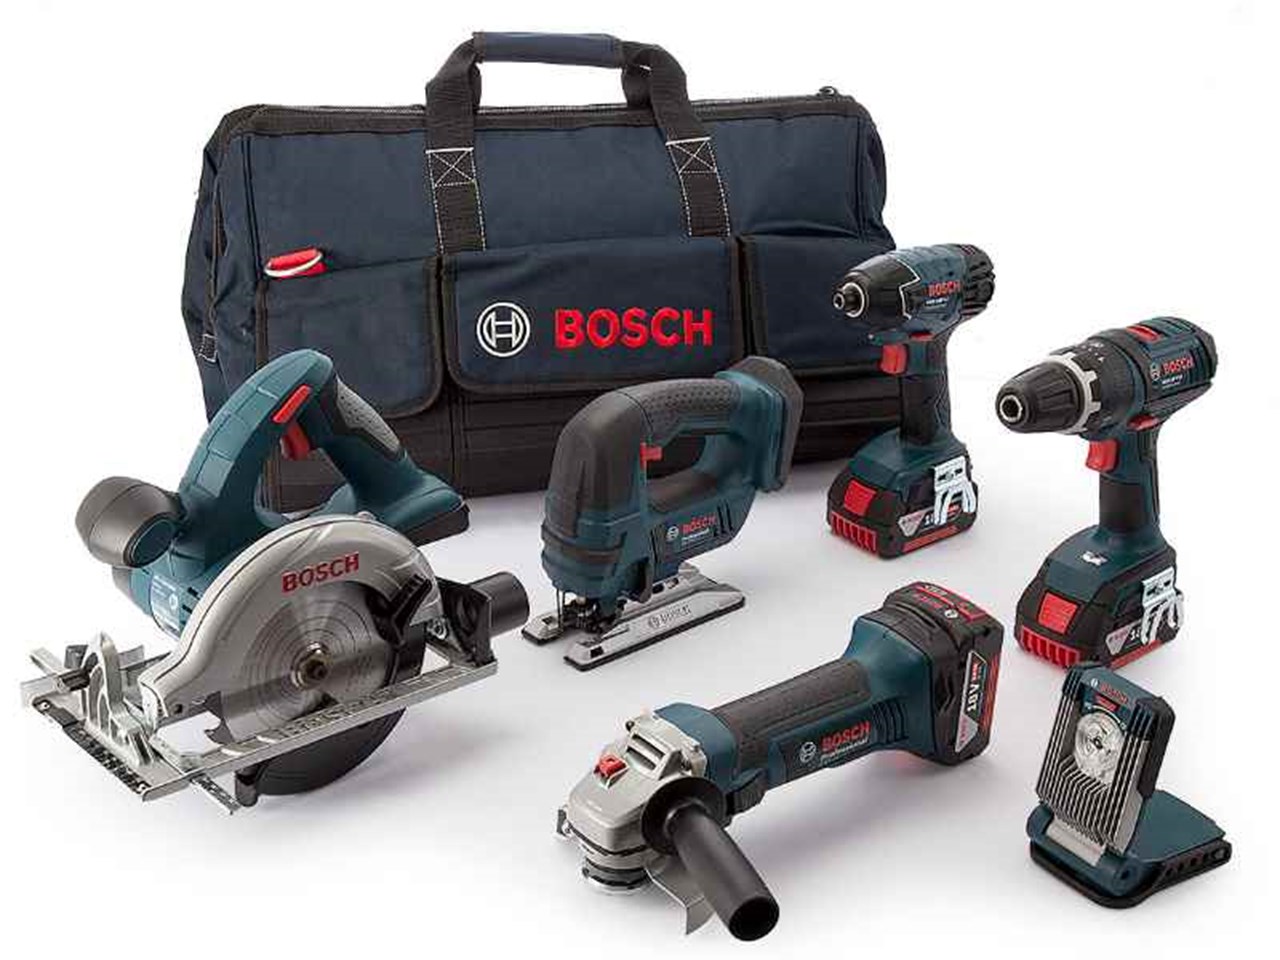 Bosch professional 18v